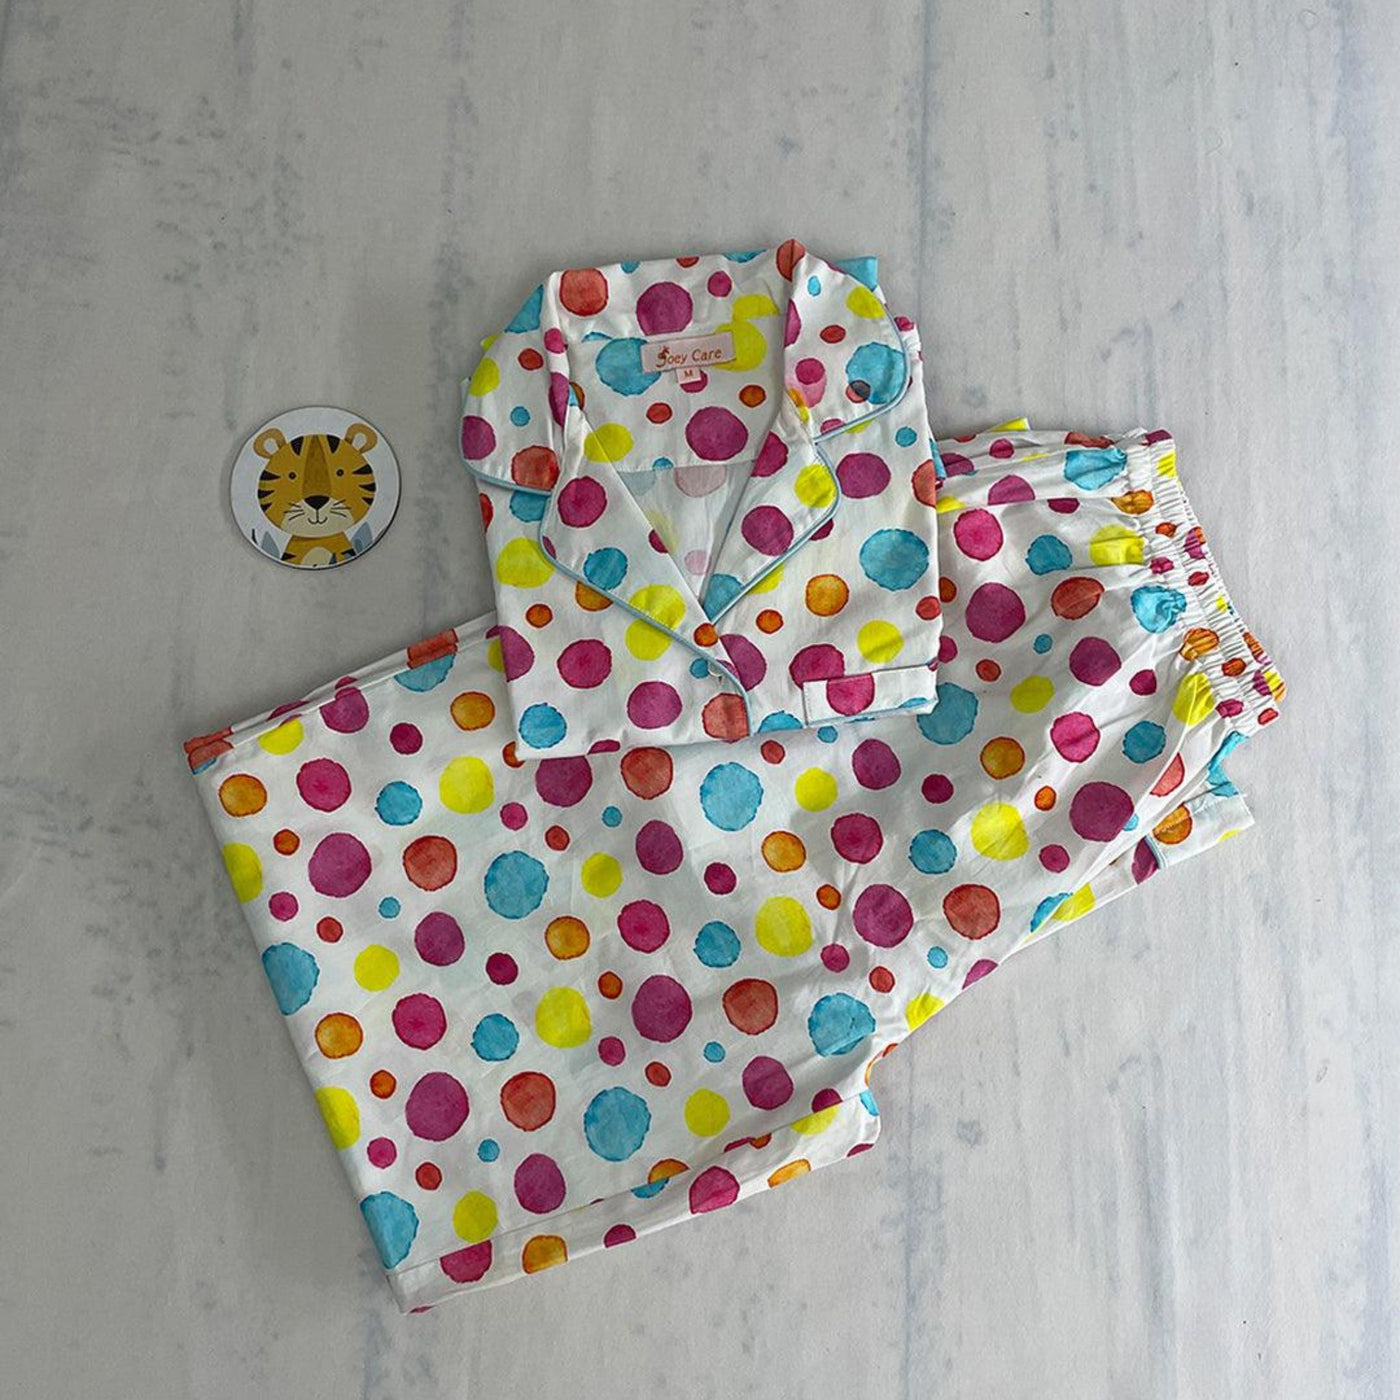 Pocket Nightwear for Girls and Boys - Polka dots Joeycare 